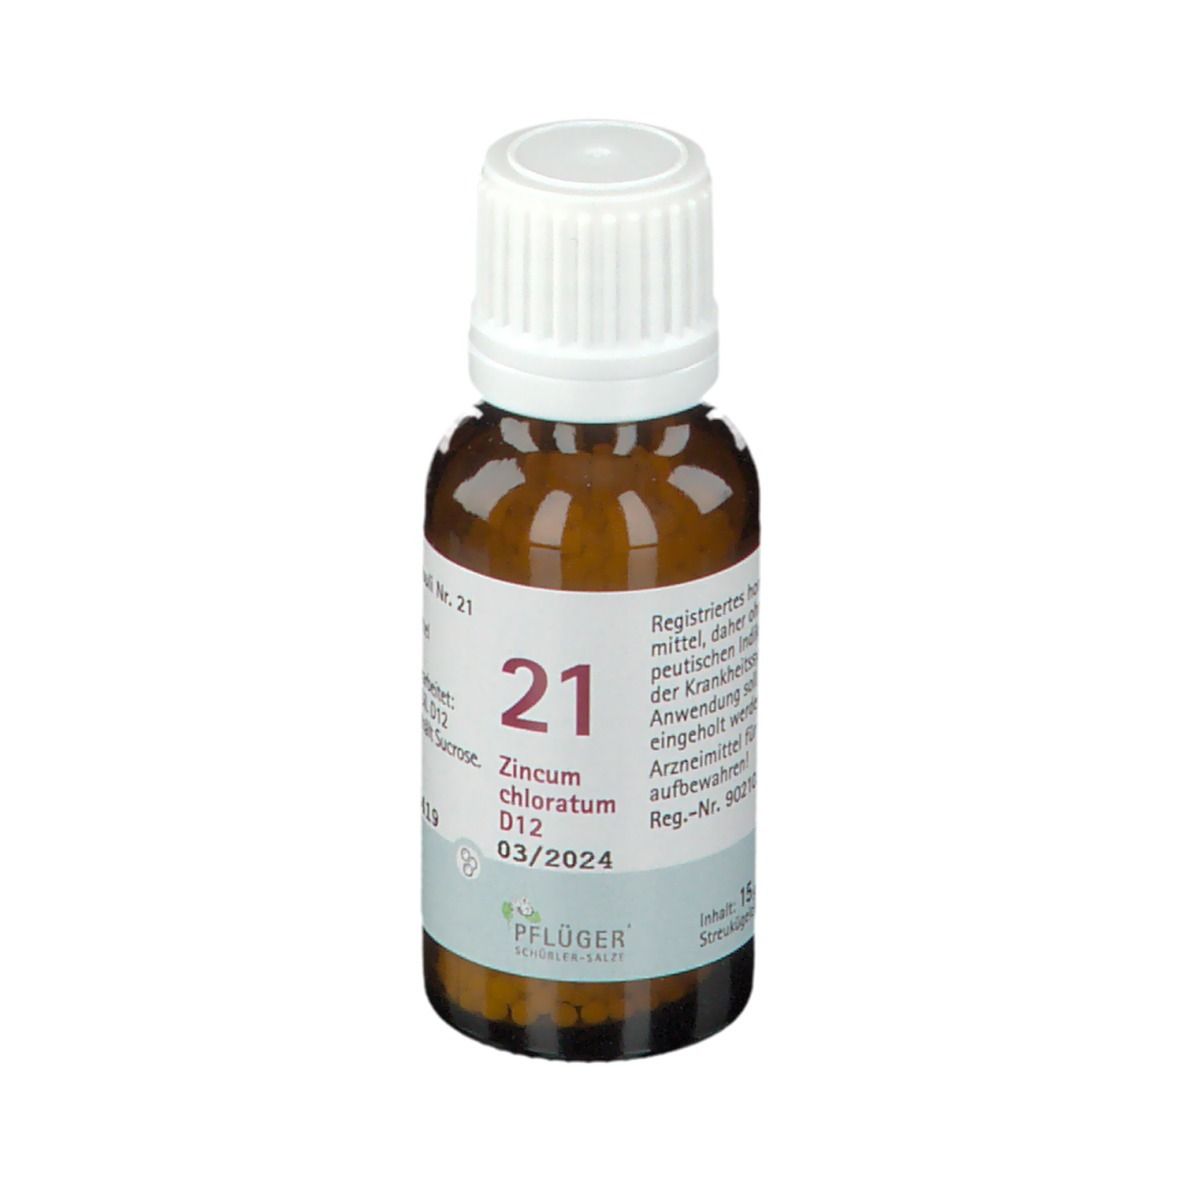 BIOCHEMIE PFLÜGER® Nr. 21 Zincum chloratum D12